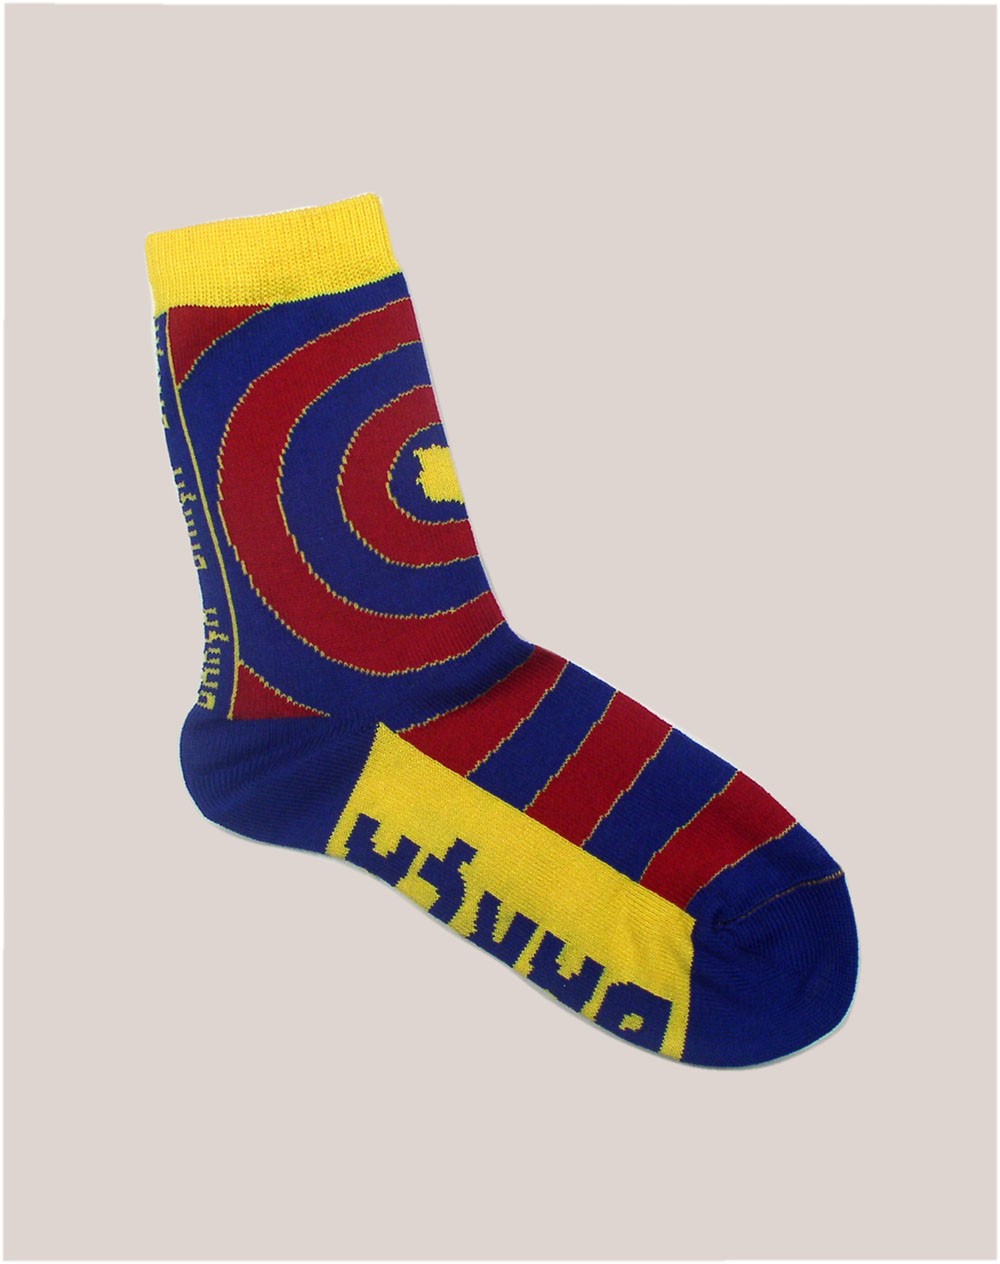 Socks Guinda - 1st team shirt Barça short socks-2604504-554